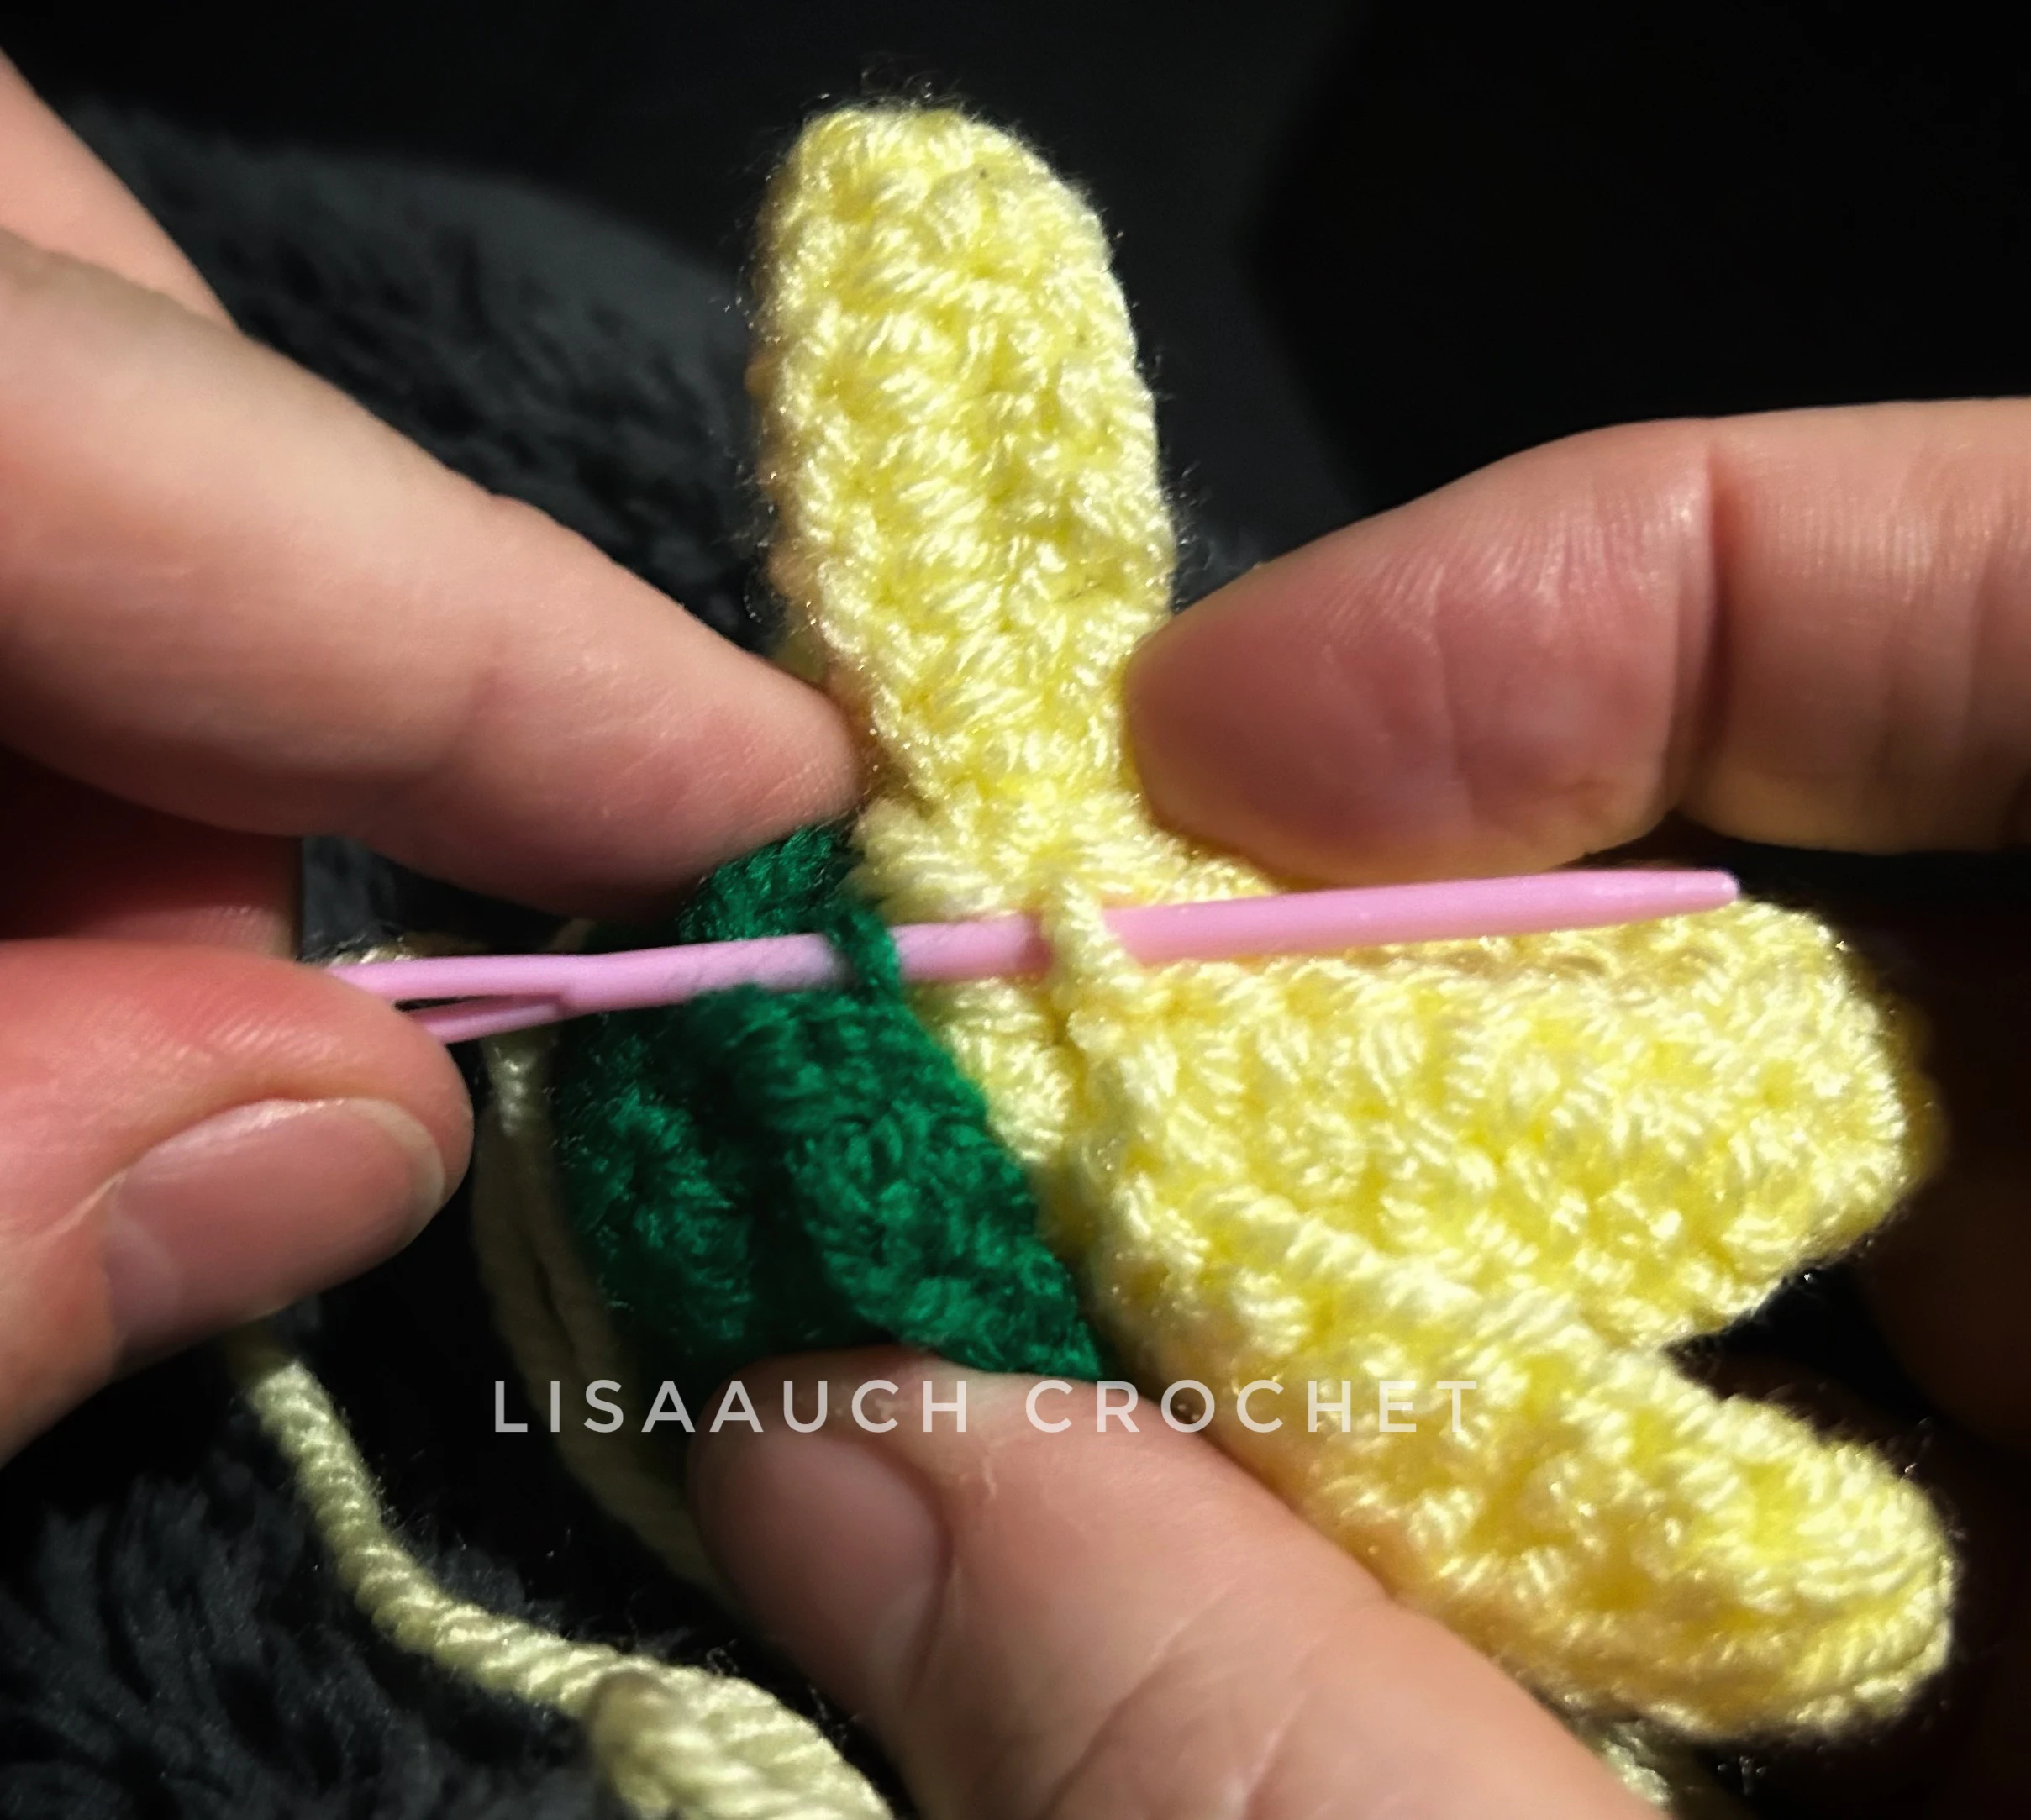 Dafodil crochet pattern, crochet dafodil,free crochet dafodil patterns, crochet daffodil pattern free